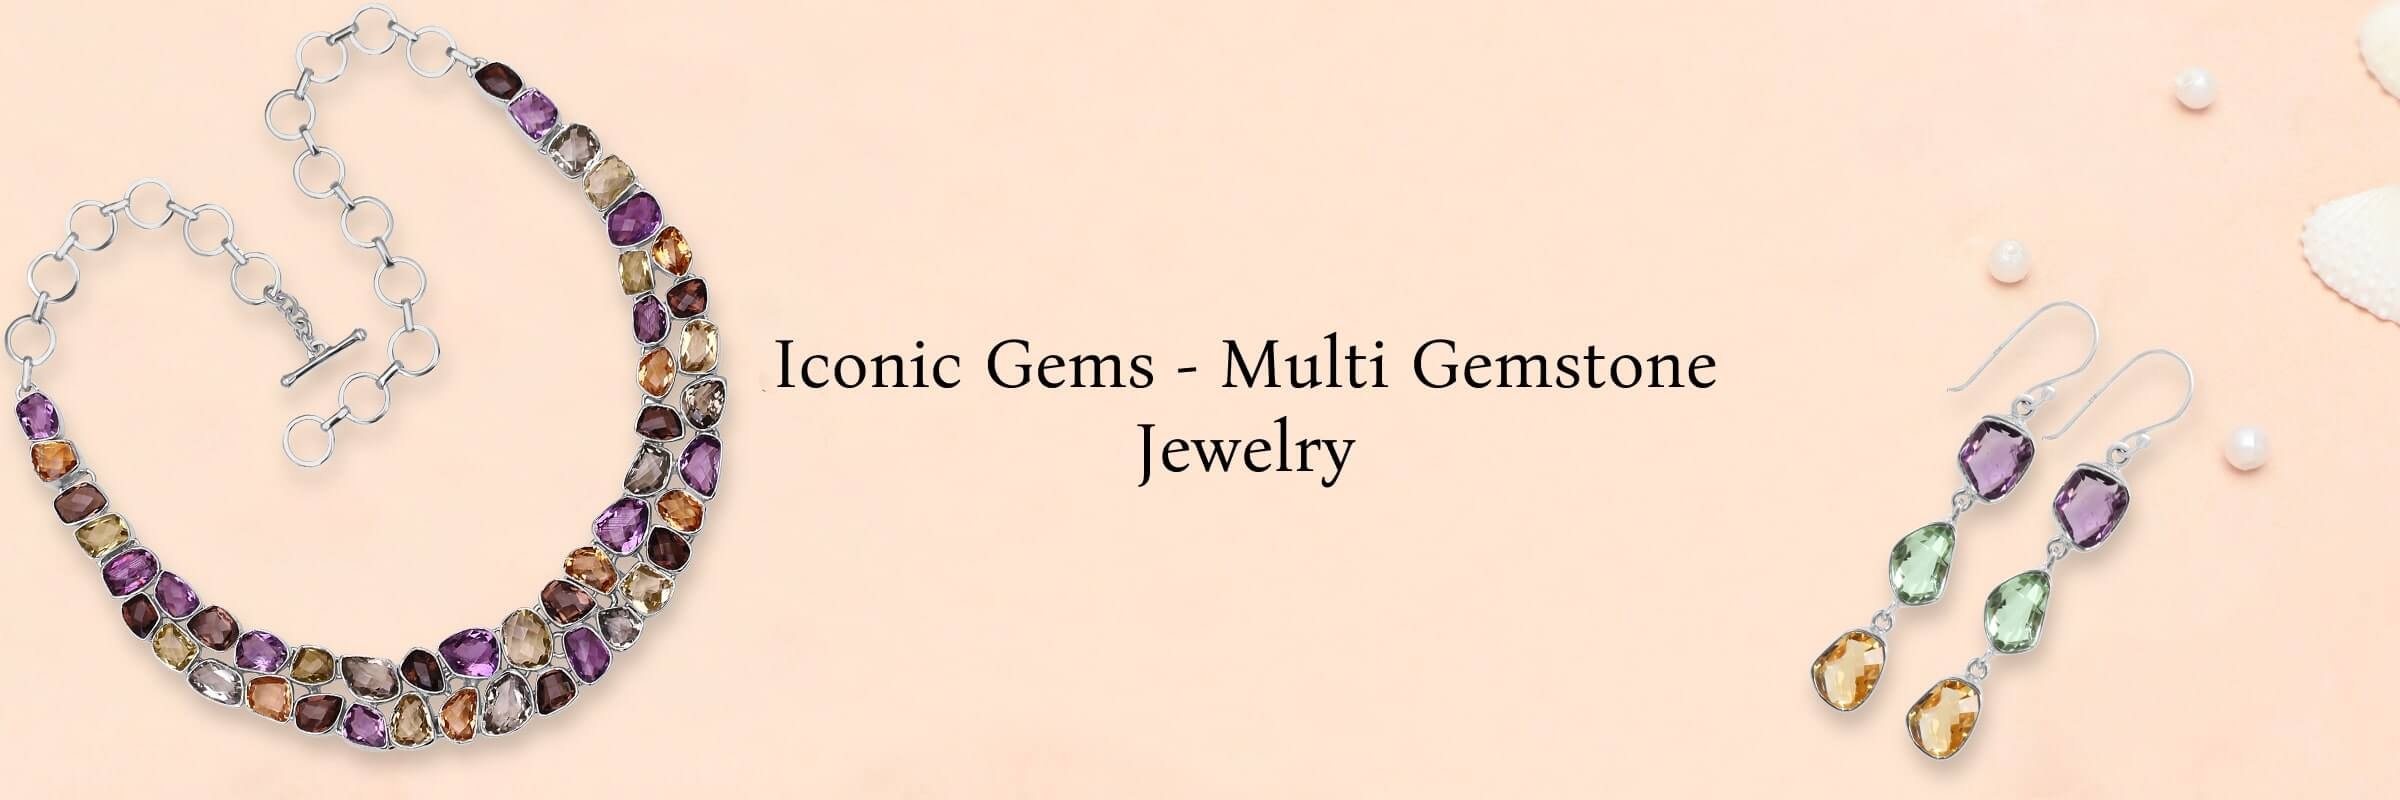 Famous Gemstones in Multi Gemstone Jewelry